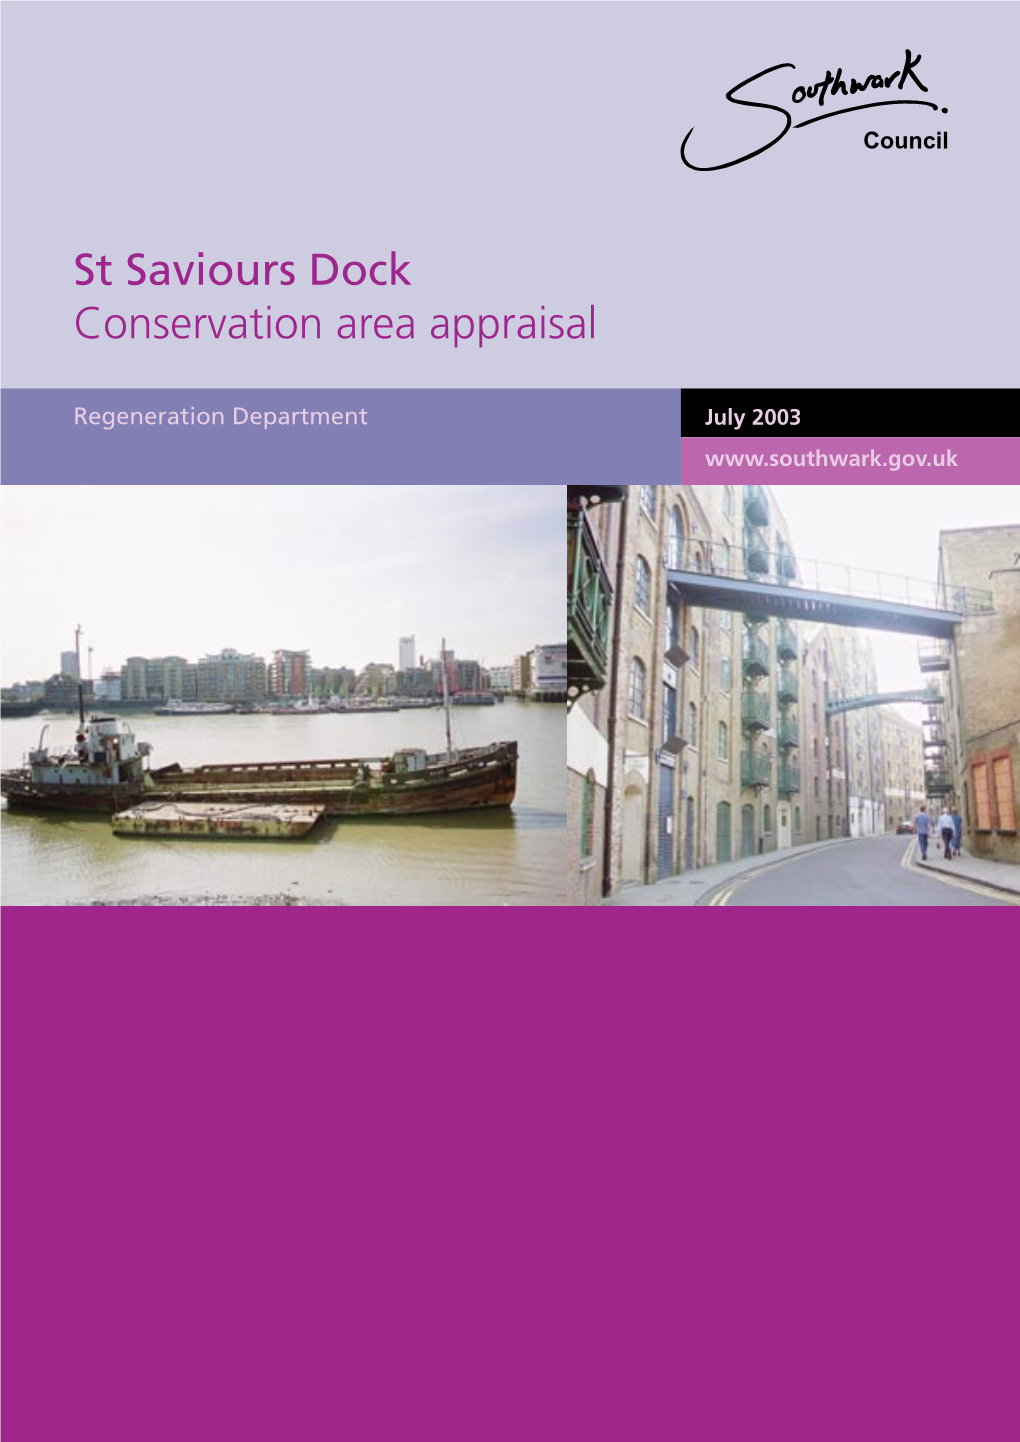 St Saviour's Dock Conservation Area Appraisal